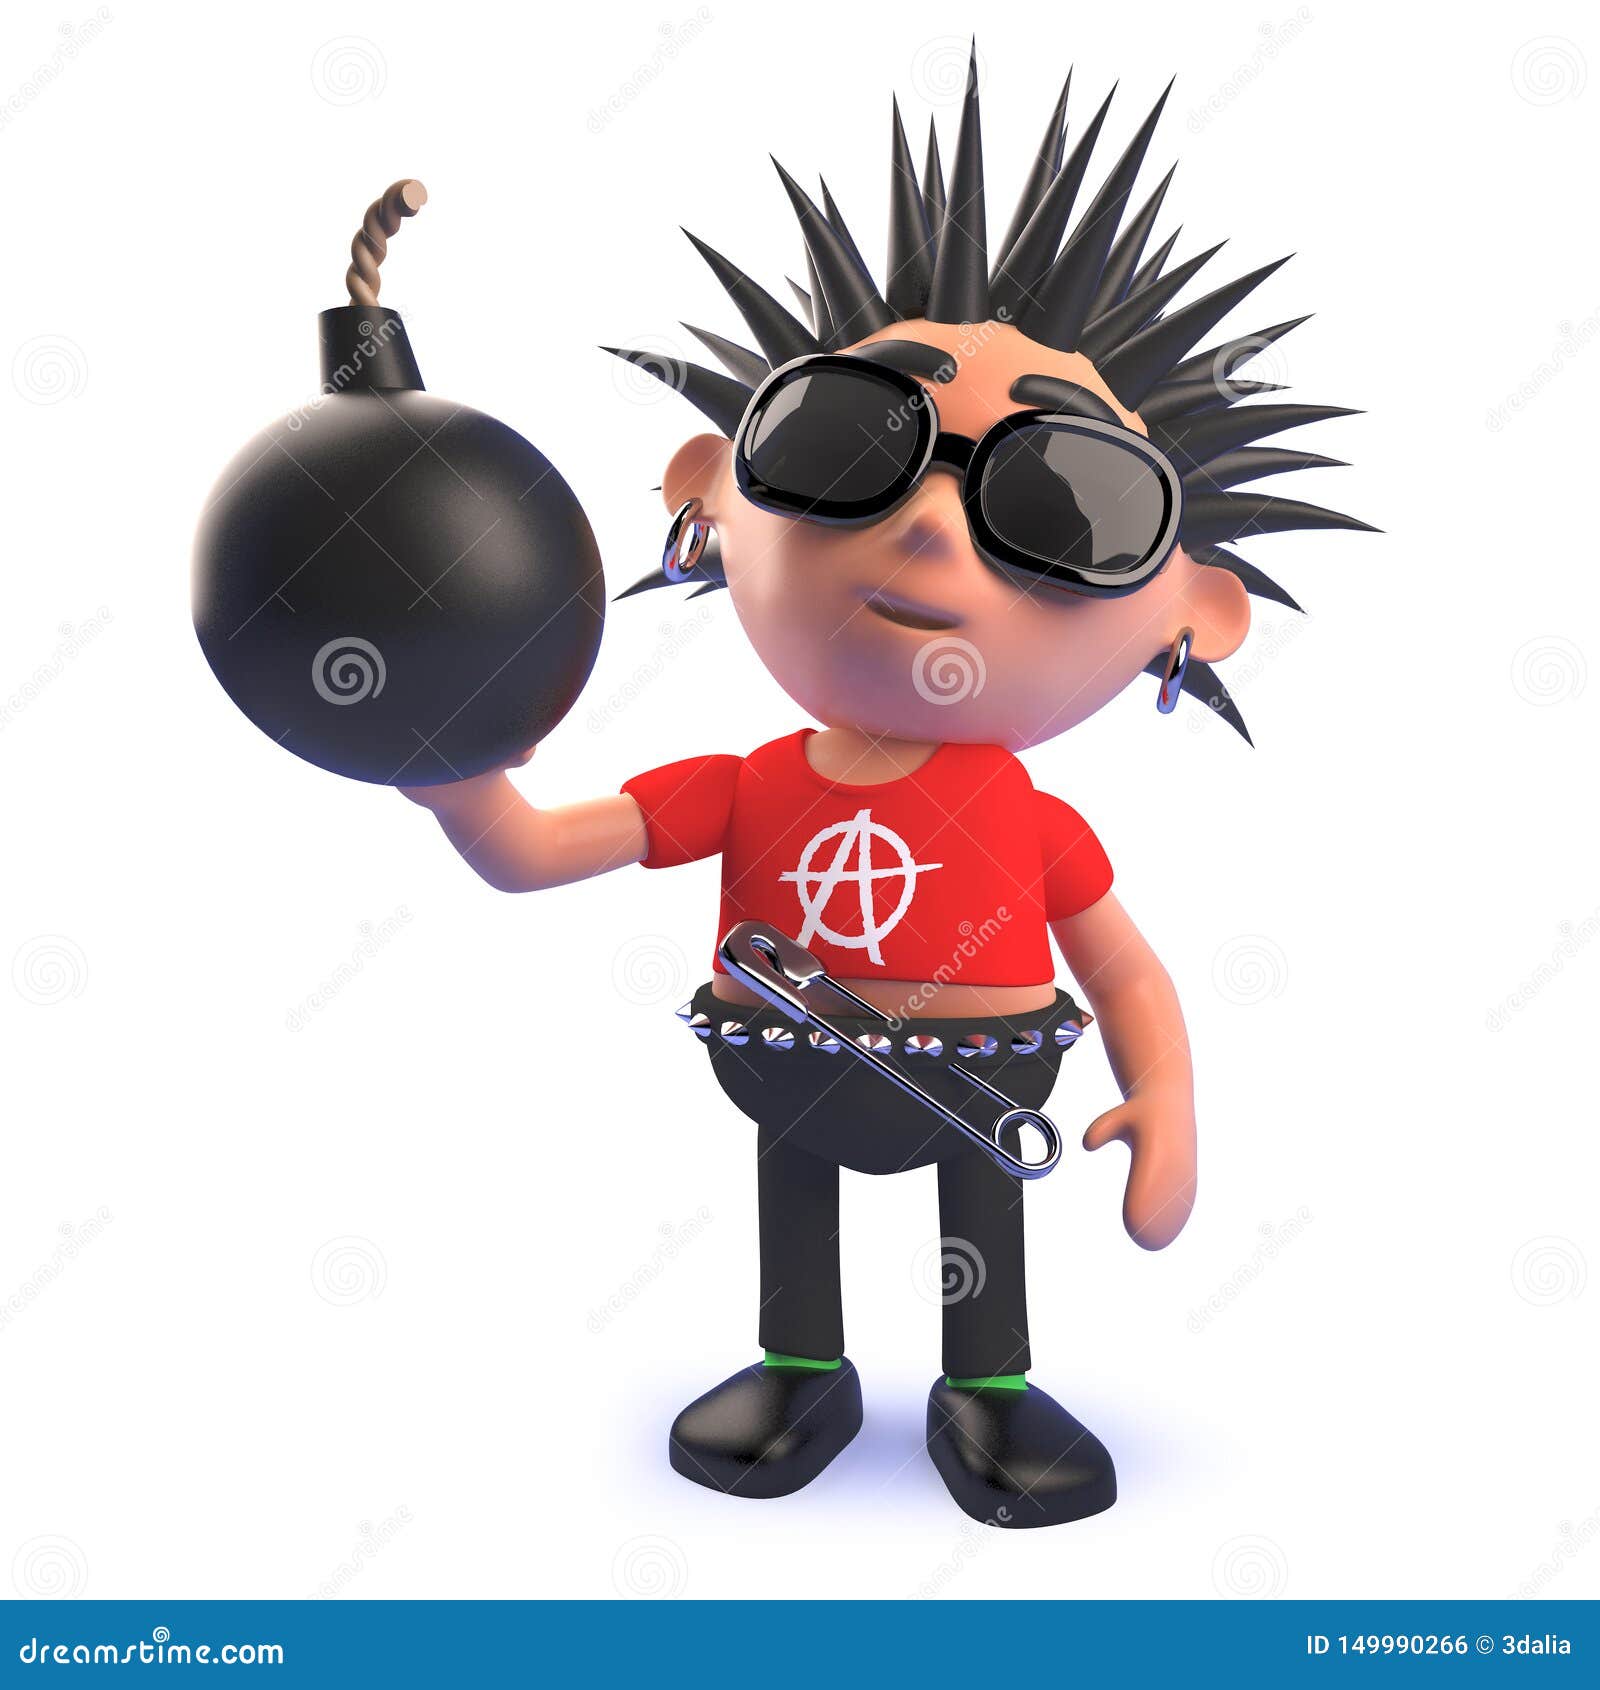 Cartoon Punk Rocker Character in 3d Holding a Bomb Stock Illustration ...